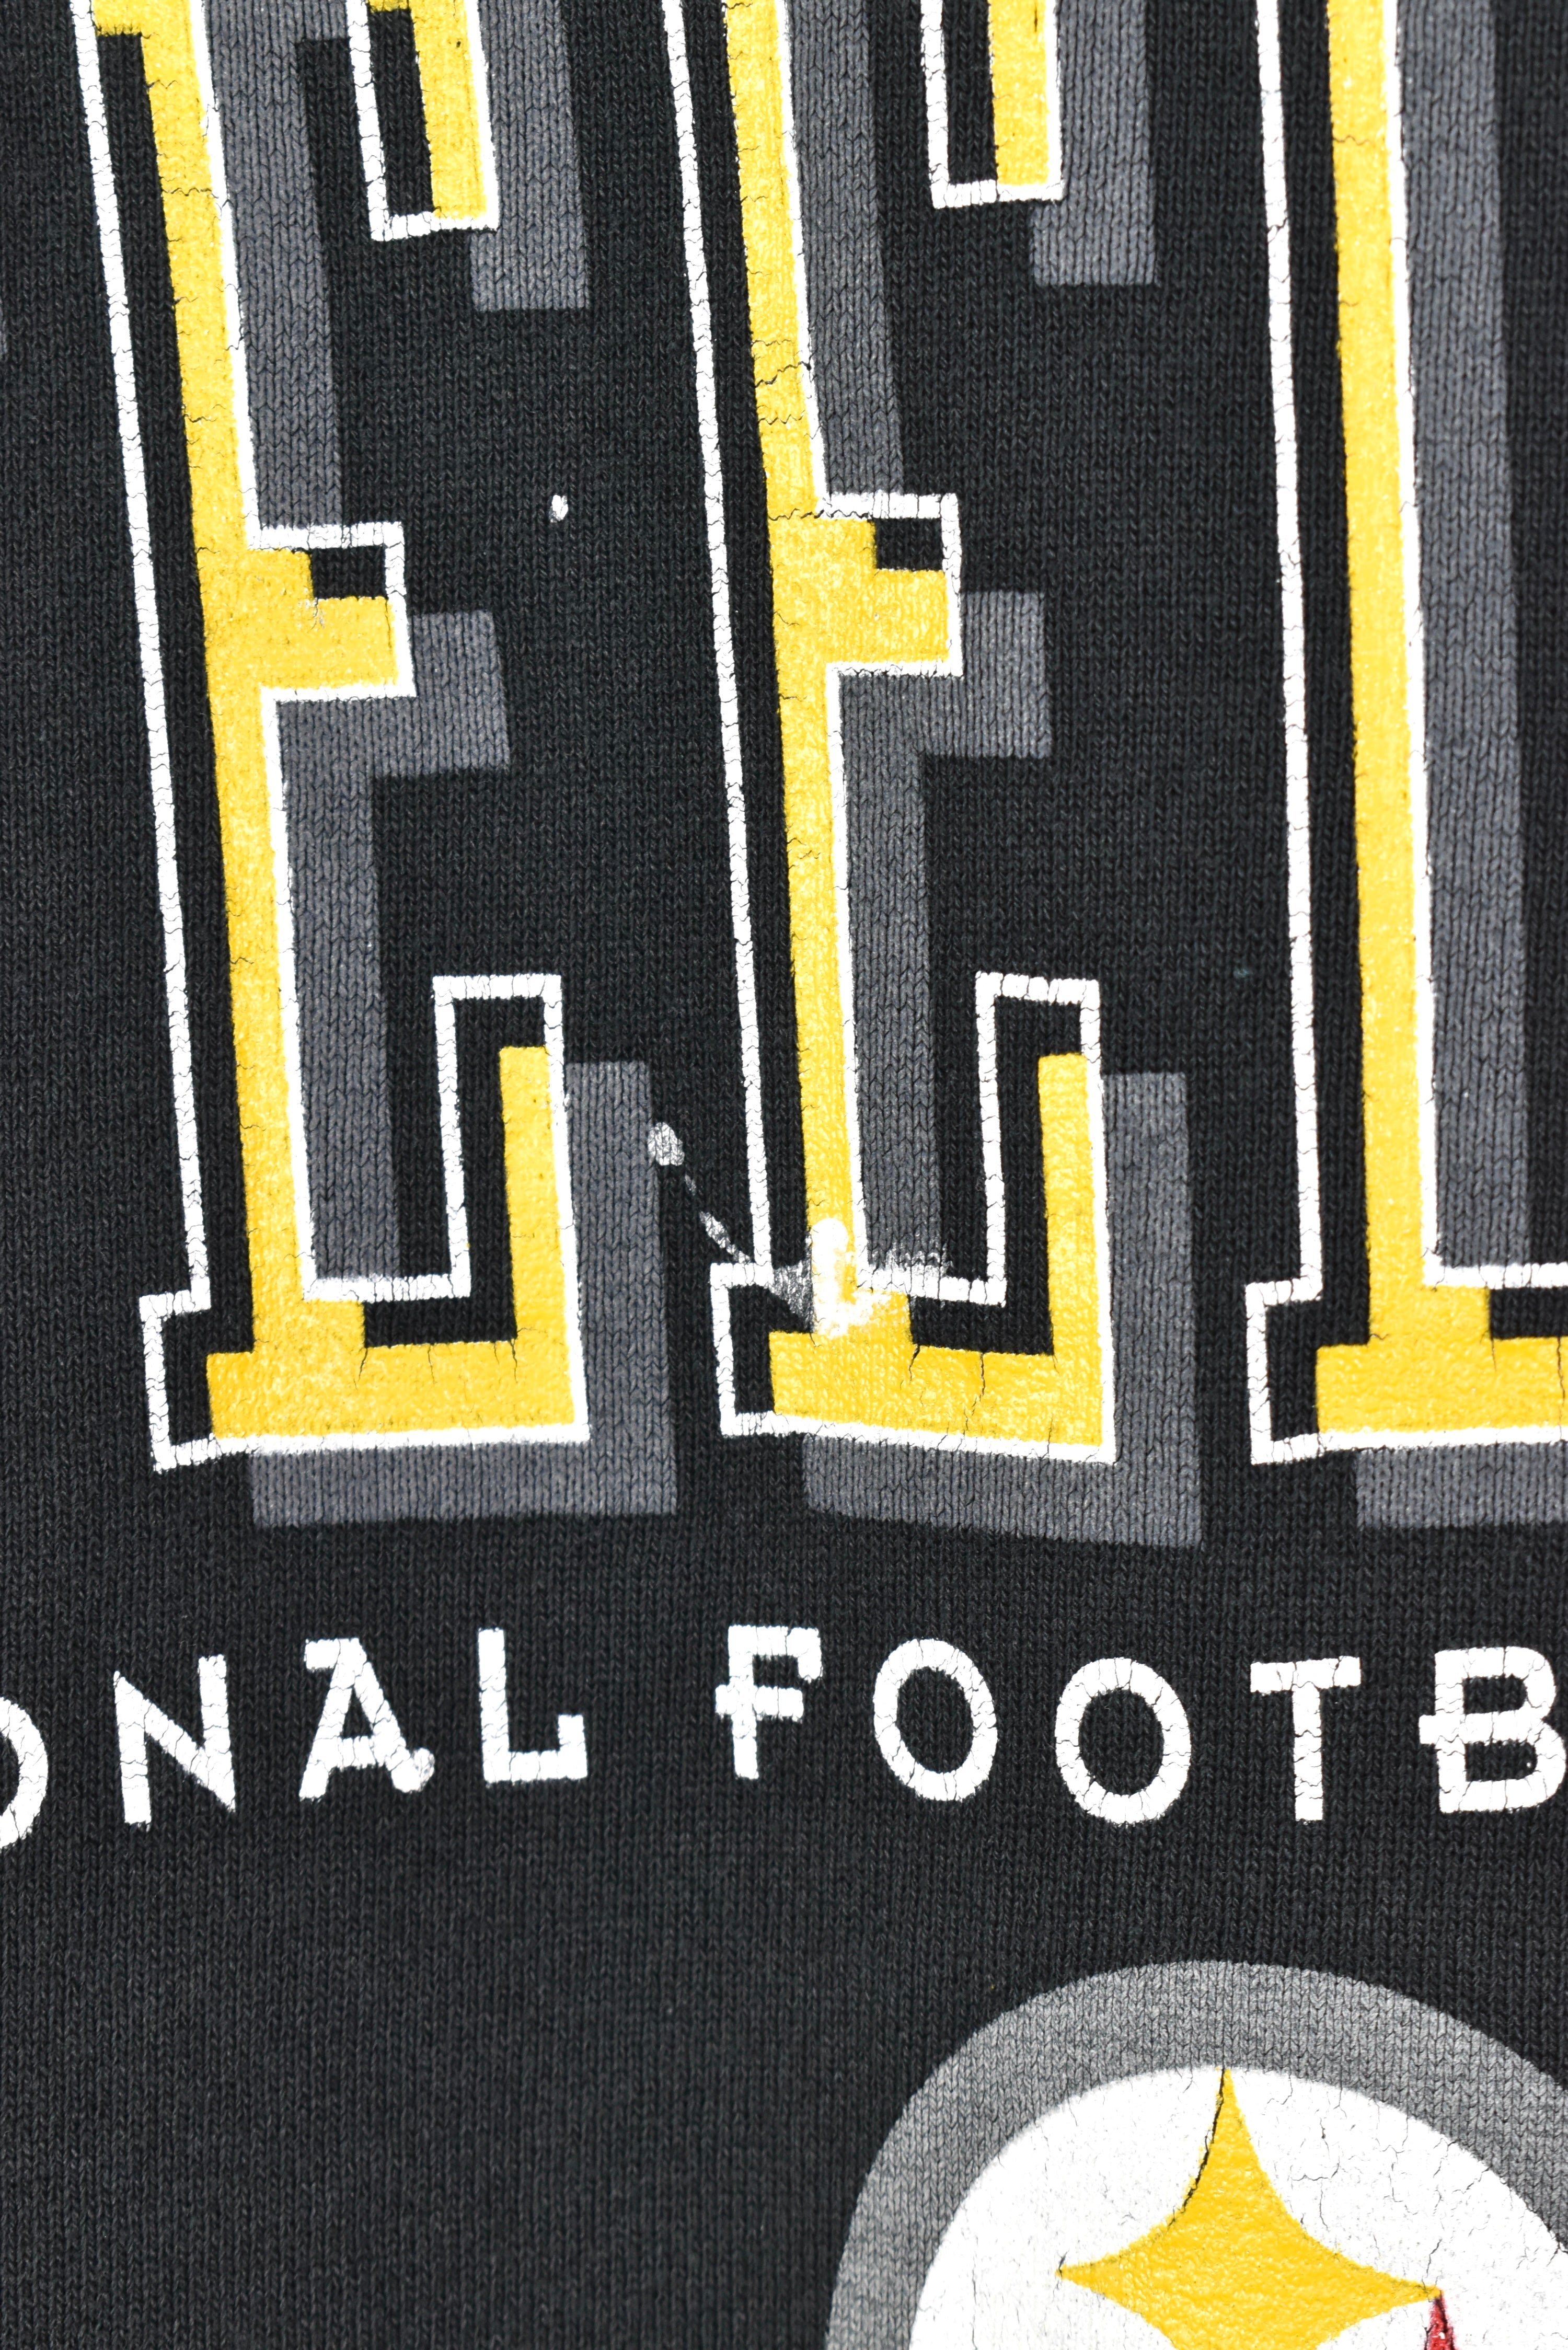 Vintage Pittsburgh Steelers sweatshirt, 1997 NFL graphic crewneck - AU XXL PRO SPORT